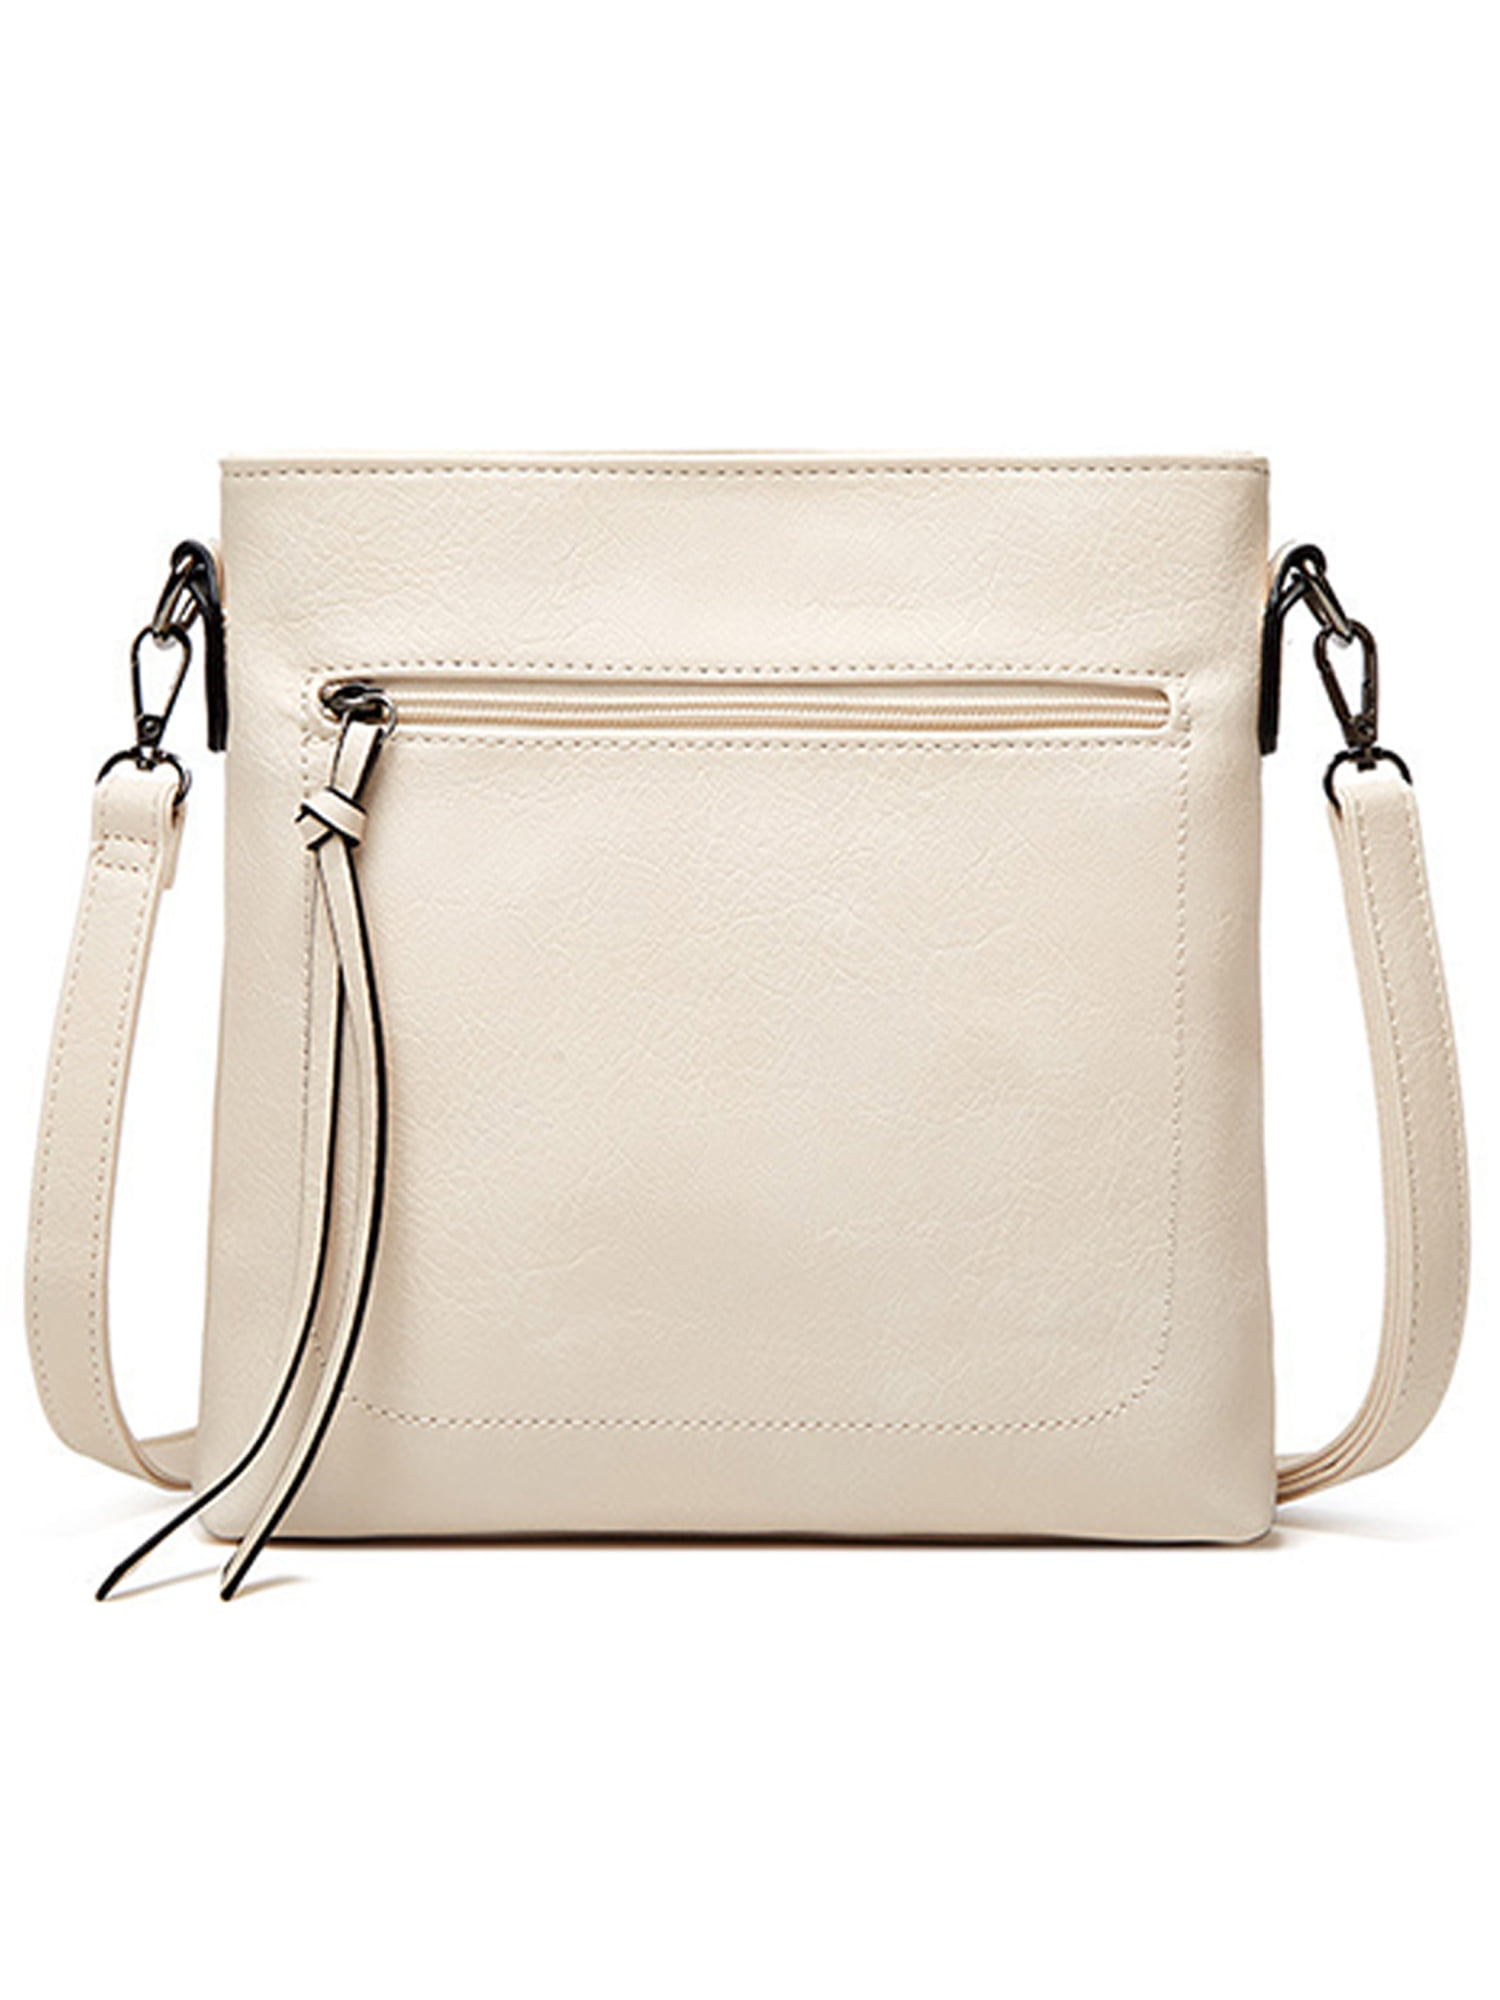 Avamo Lady Handbag Top Handle Crossbody Bags Purse Satchel Vintage Shoulder  Bag Large Capacity Dating Tote Brown Home Bag None 